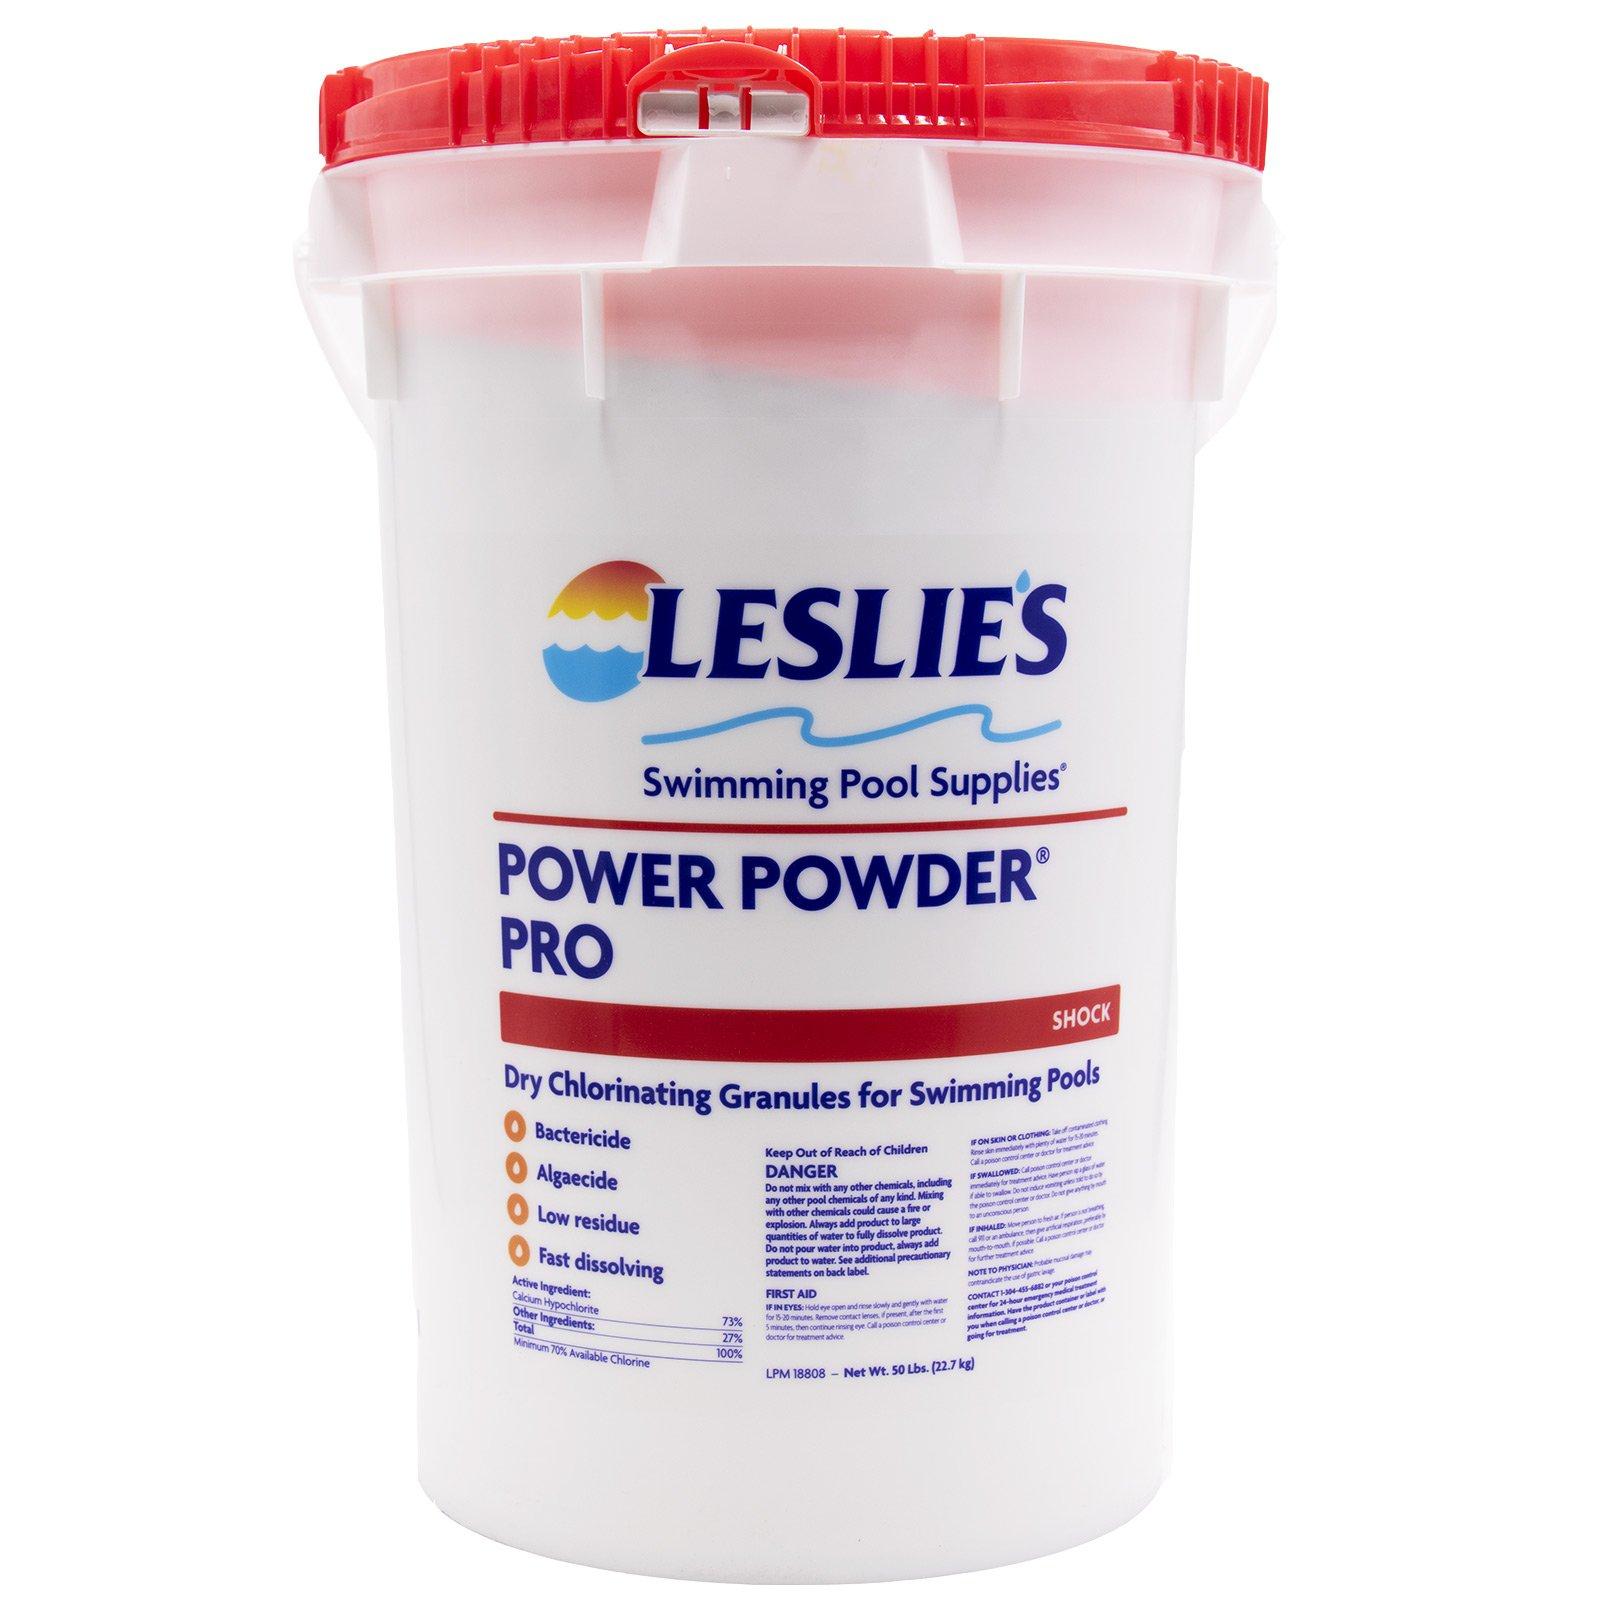 Leslie's  Power Powder Pro Calcium Hypochlorite Pool Shock  50 lbs